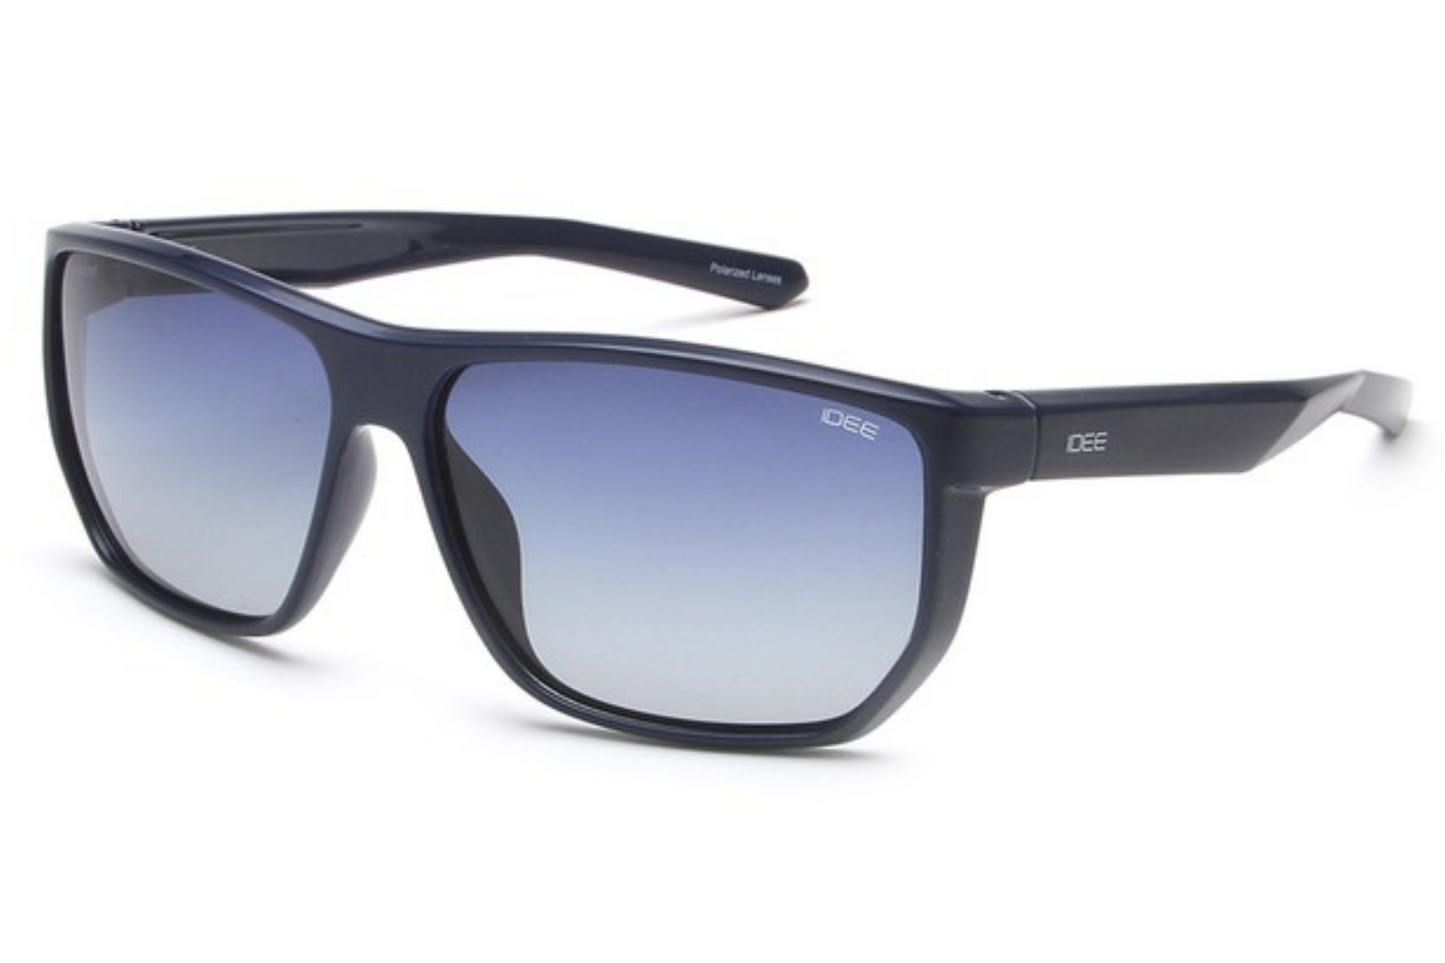 IDEE Sunglasses S2900